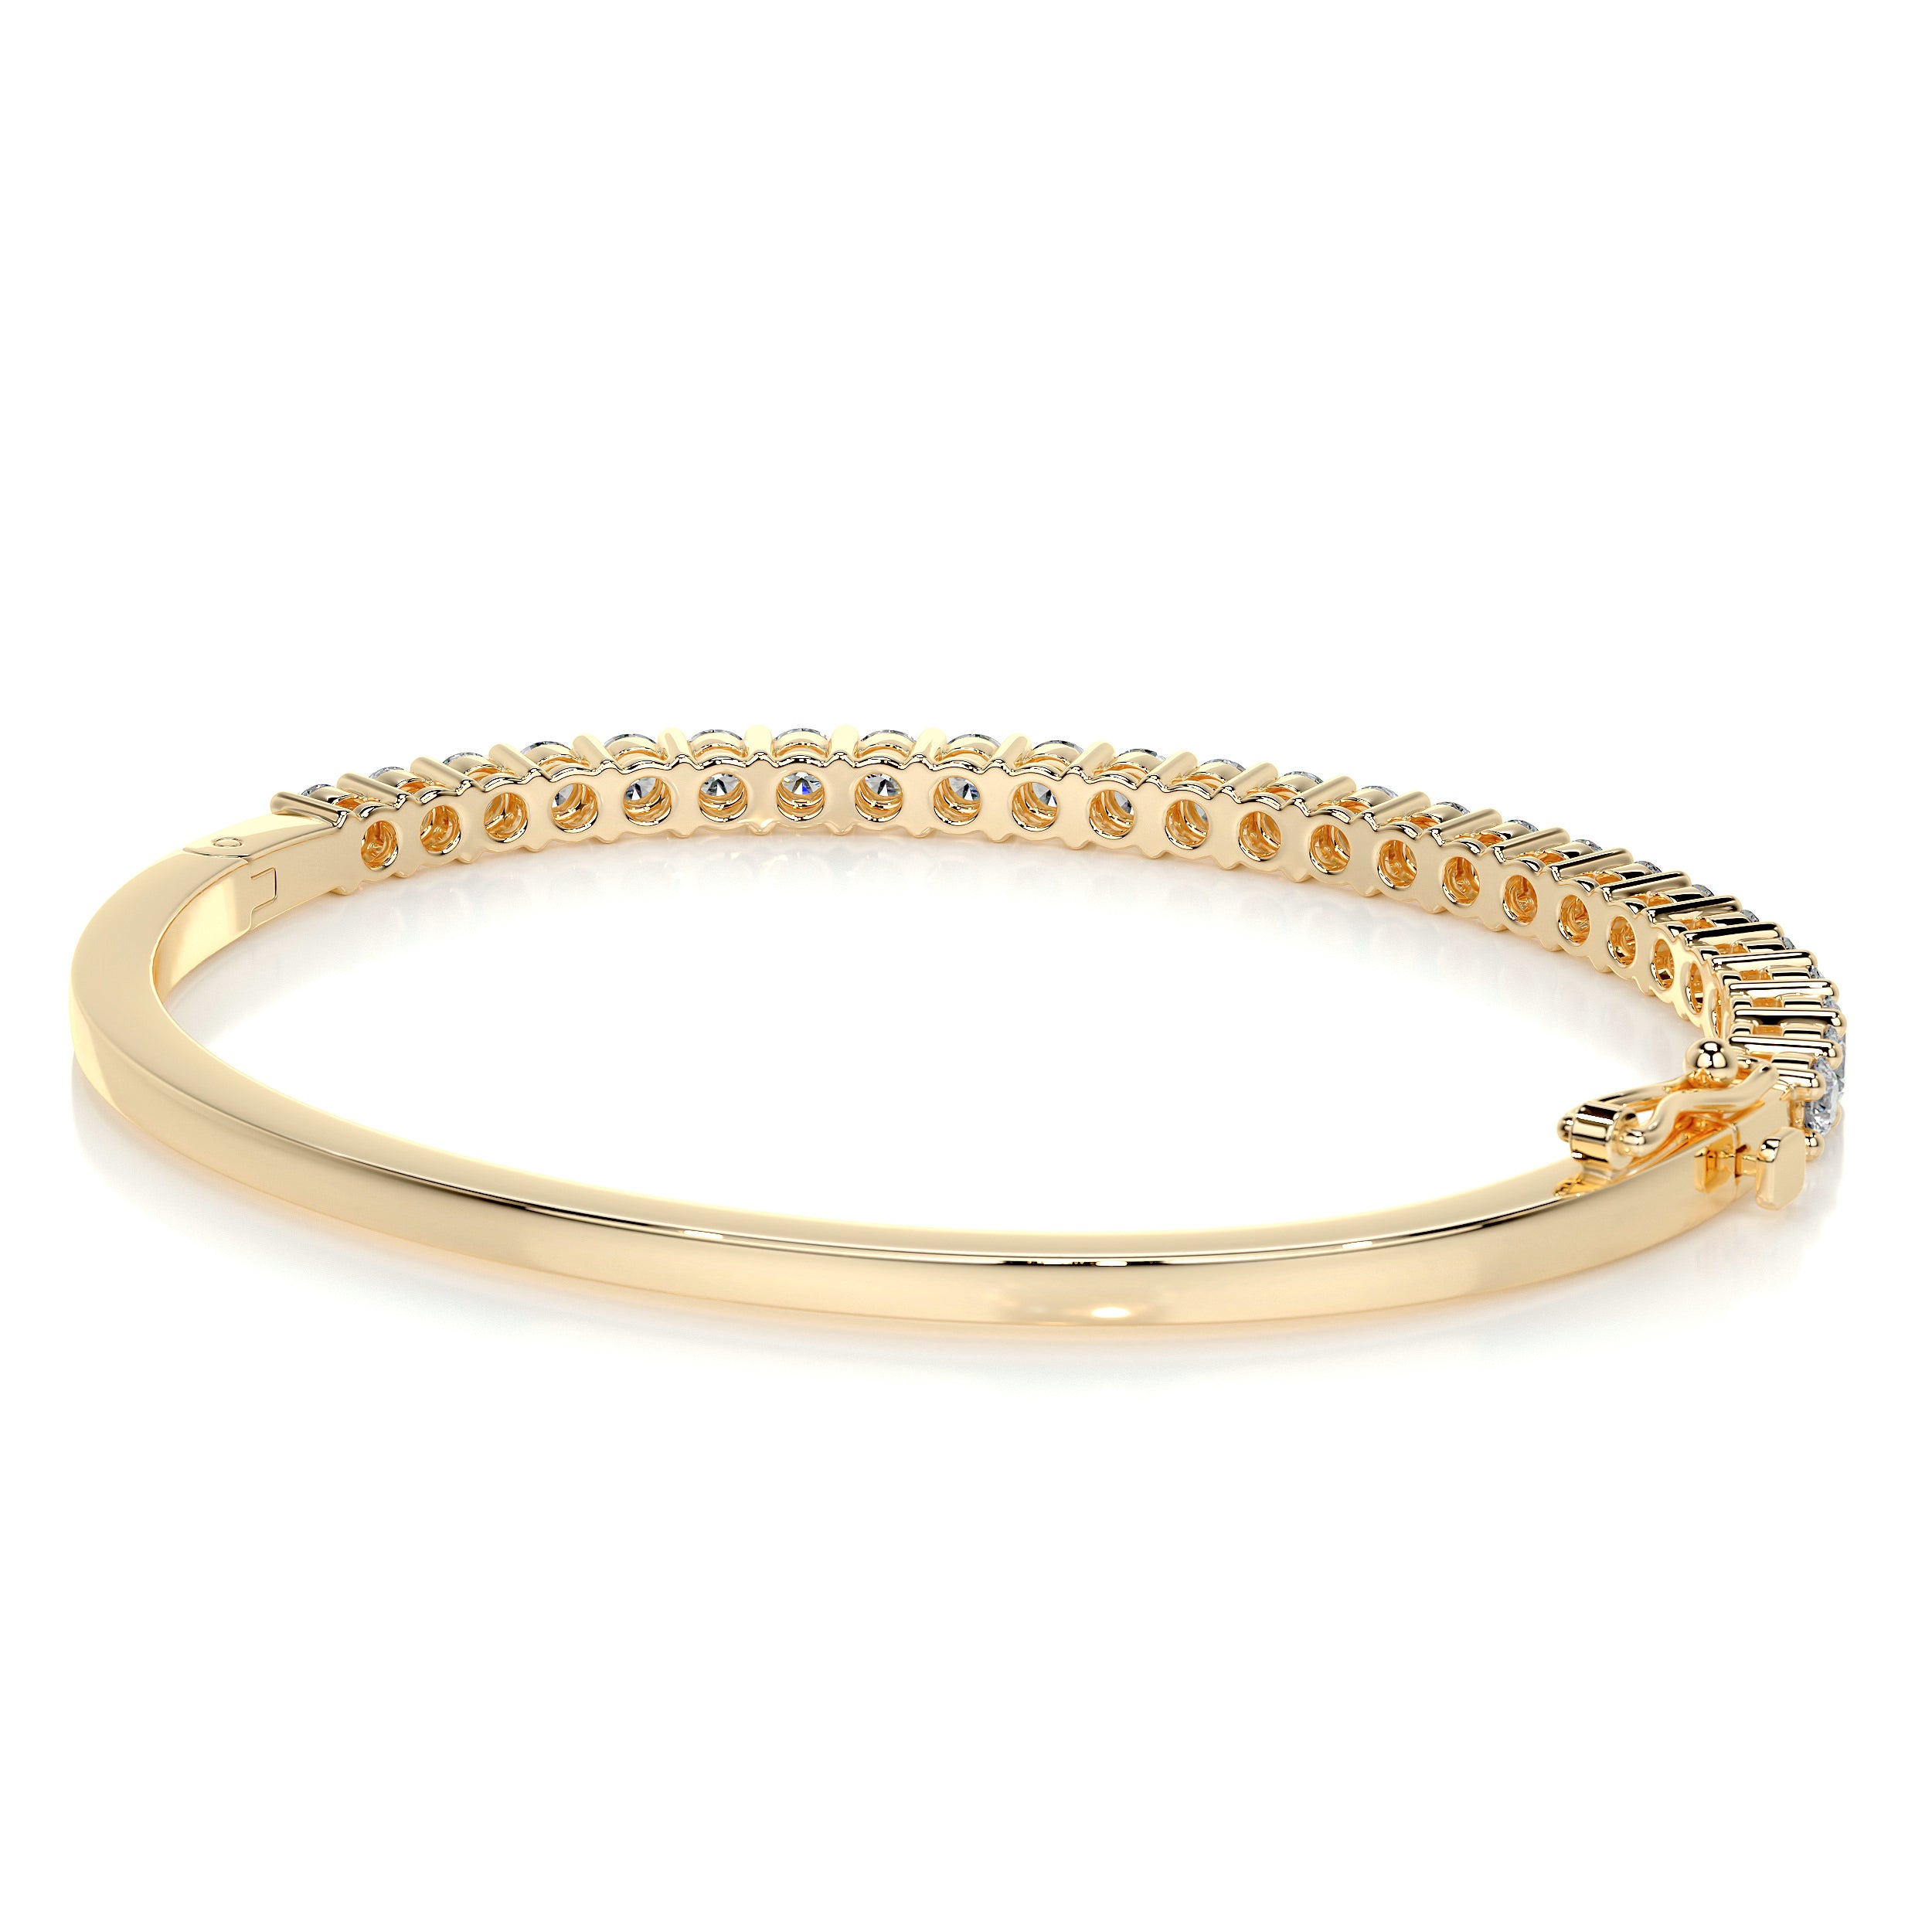 Karla Bangle Lab Grown Diamond Bracelet   (2.5 Carat) -18K Yellow Gold